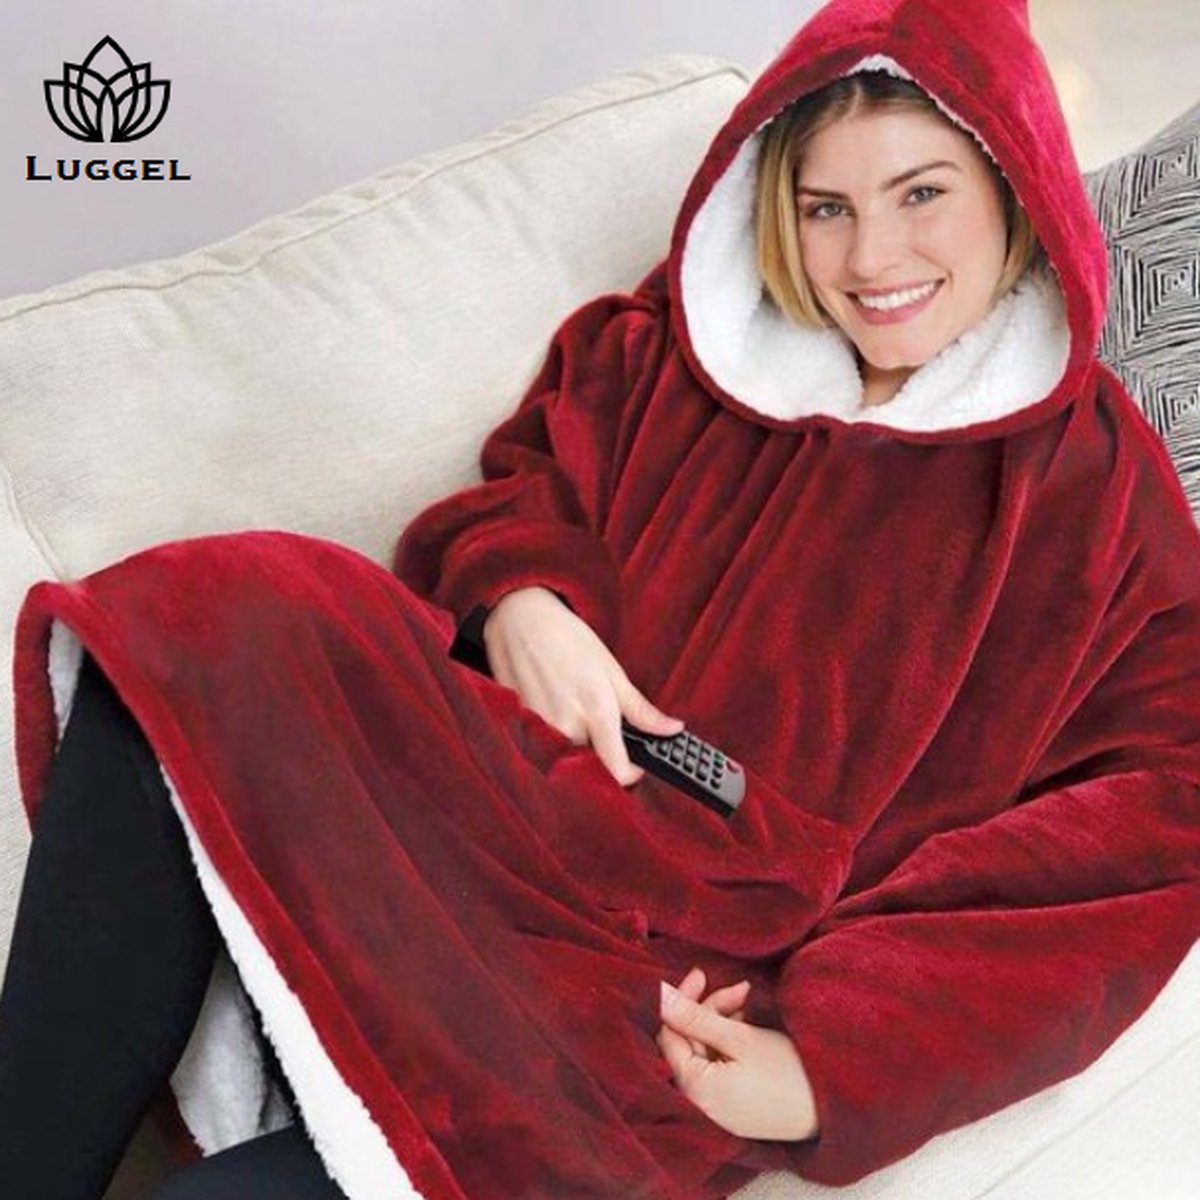 Hoodie Deken - Extra Groot - Hoodie - Deken - Bordeaux Rood - Cuddle hoodie - Voor vrouwen - Voor mannen - Sinterklaas - Kerst 2023 - Luggel